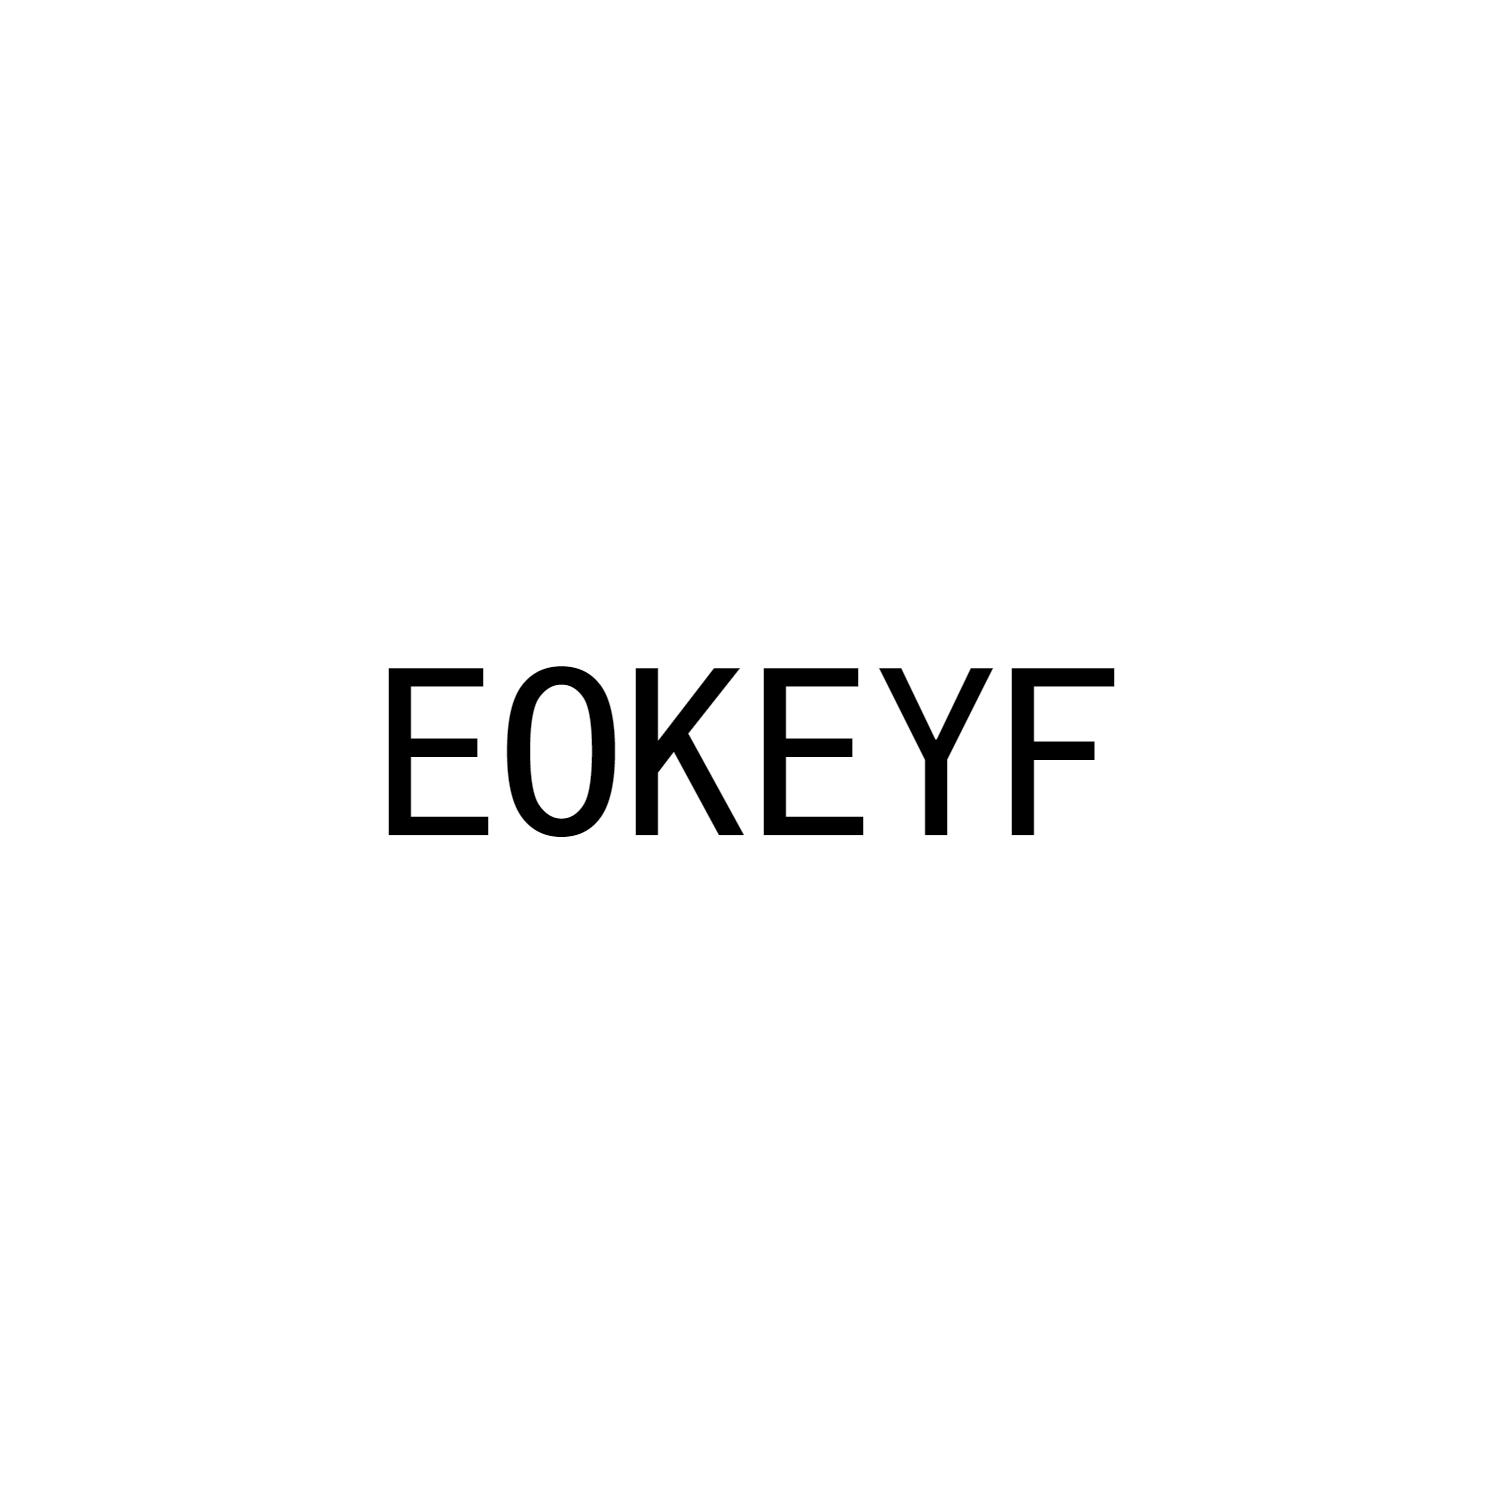 EOKEYF